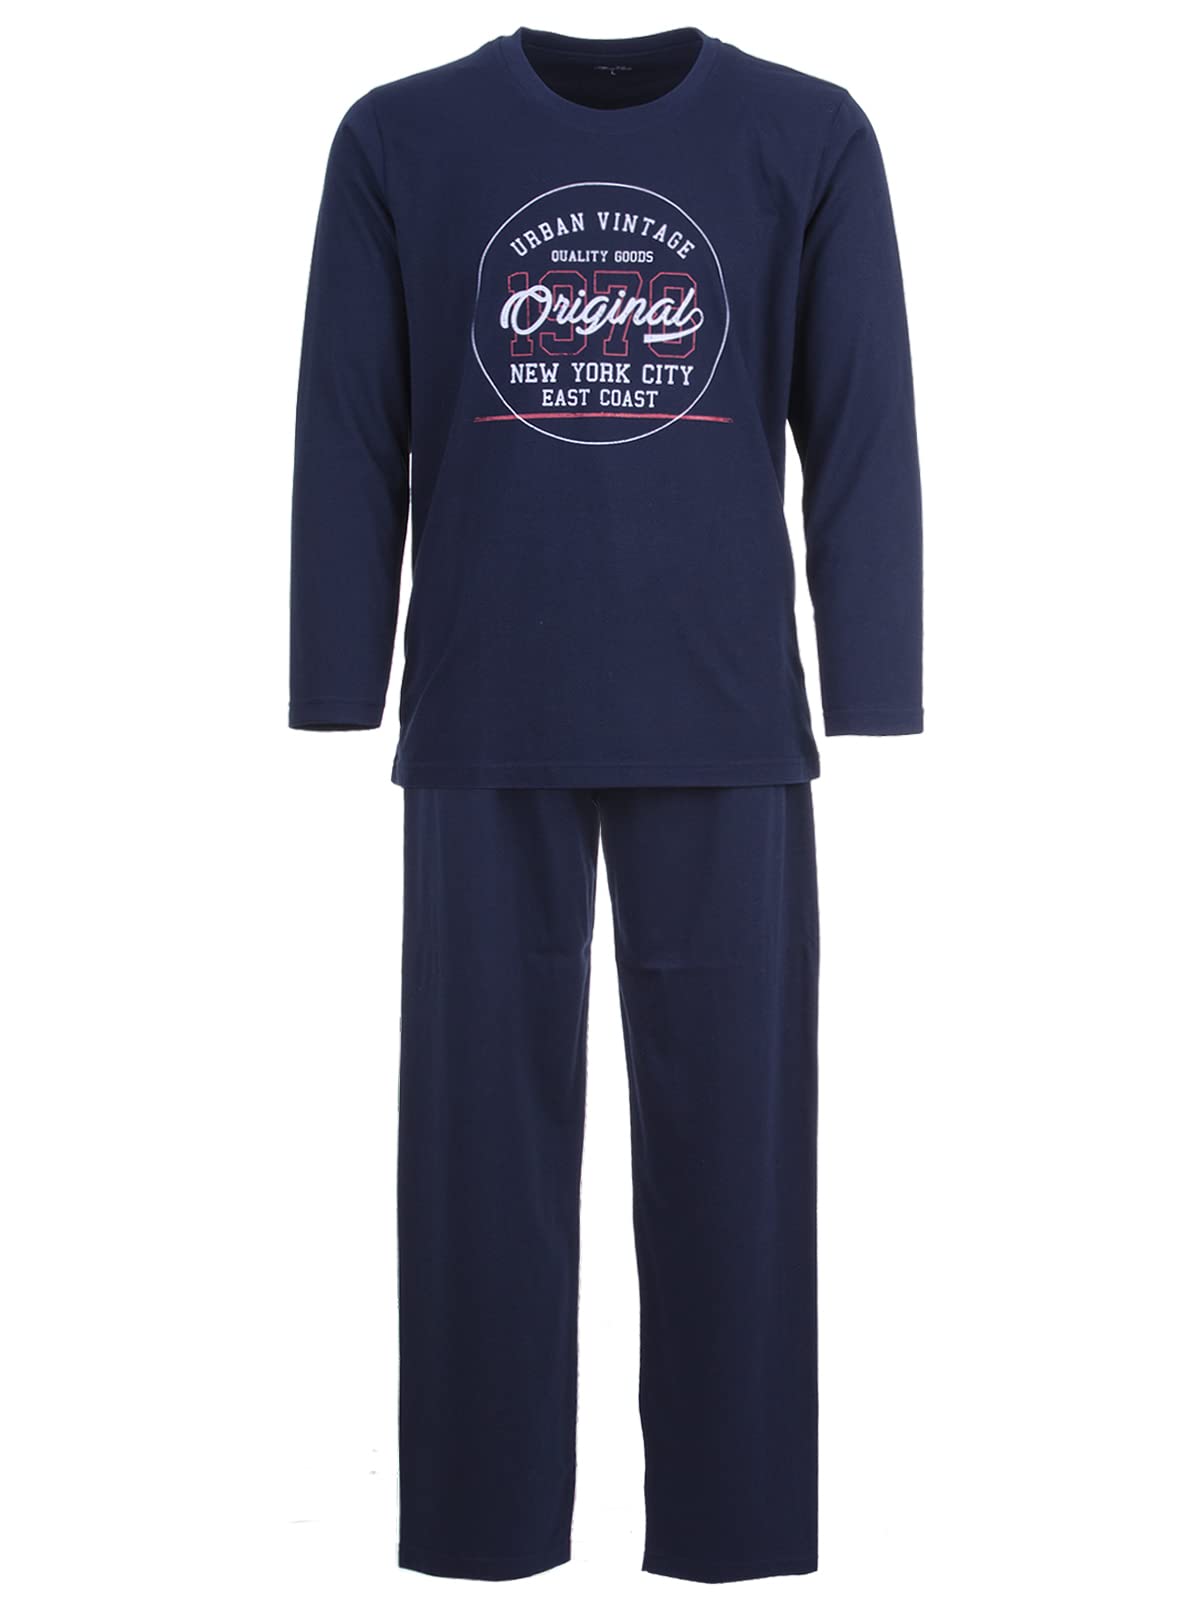 LUCKY Herren Pyjama lang Schlafanzug Pyjama Set Druck Motiv, Farbe:Navy, Größe:XL